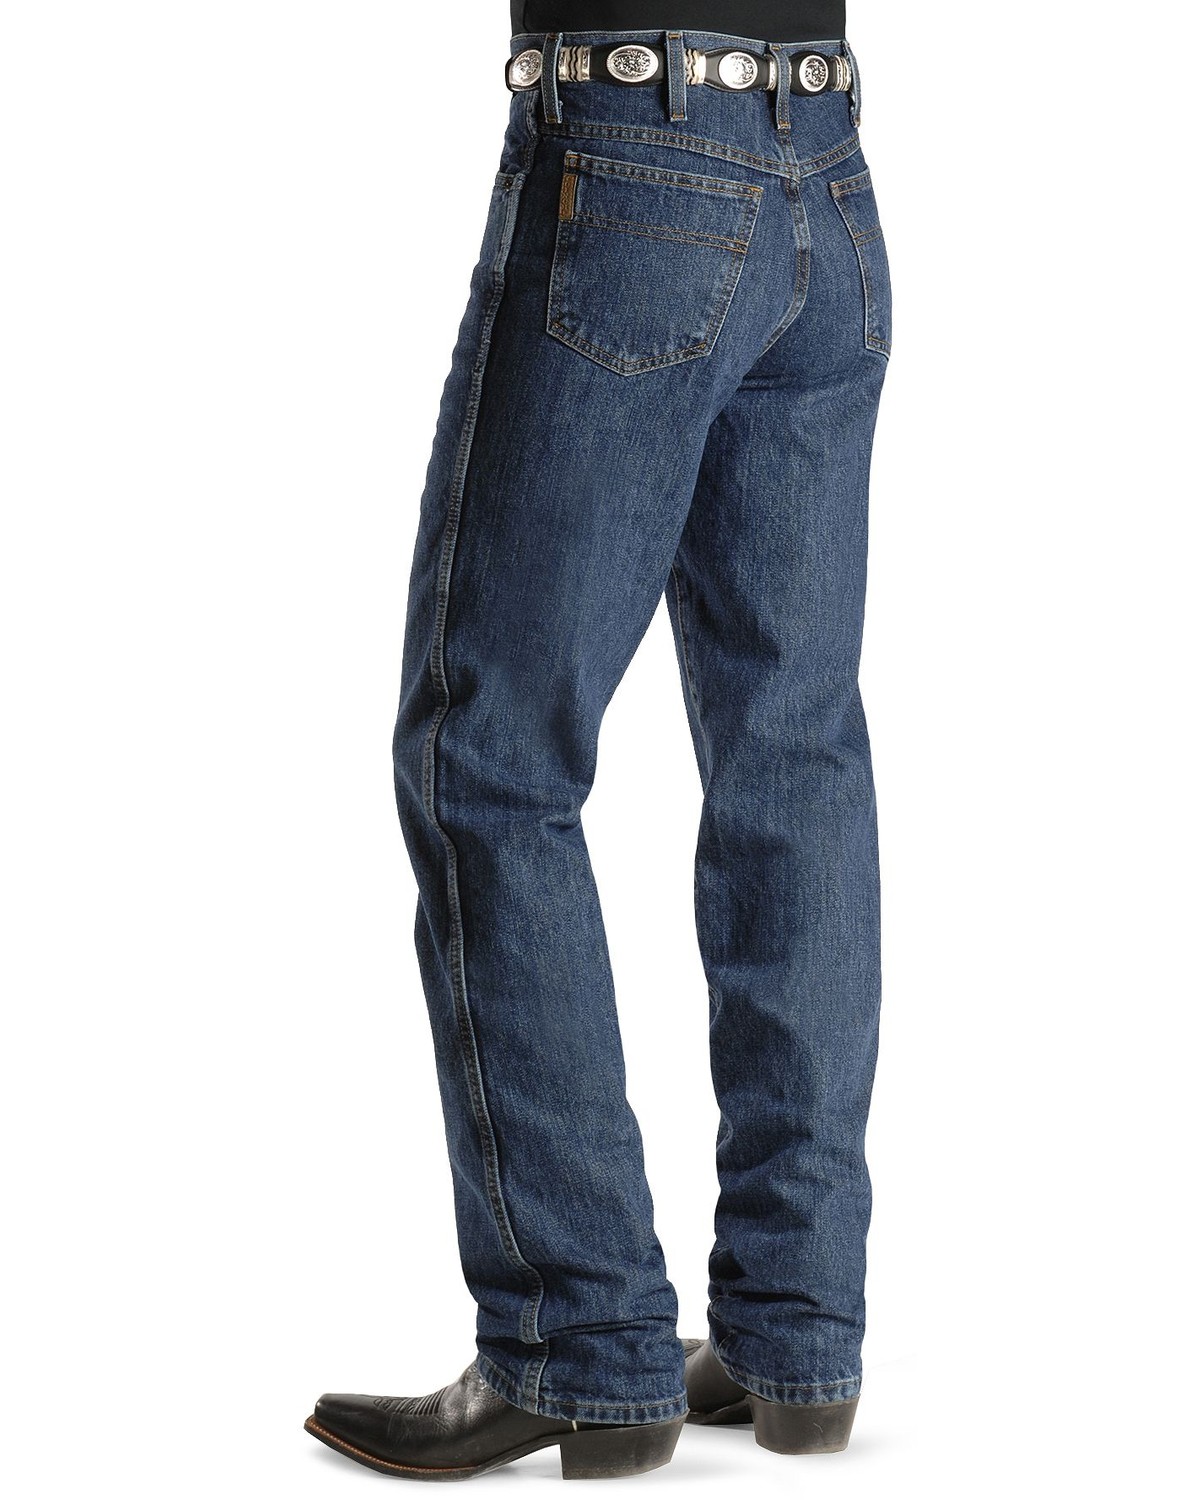 Cinch Jeans - Bronze Label Slim Fit - Big & Tall | Sheplers